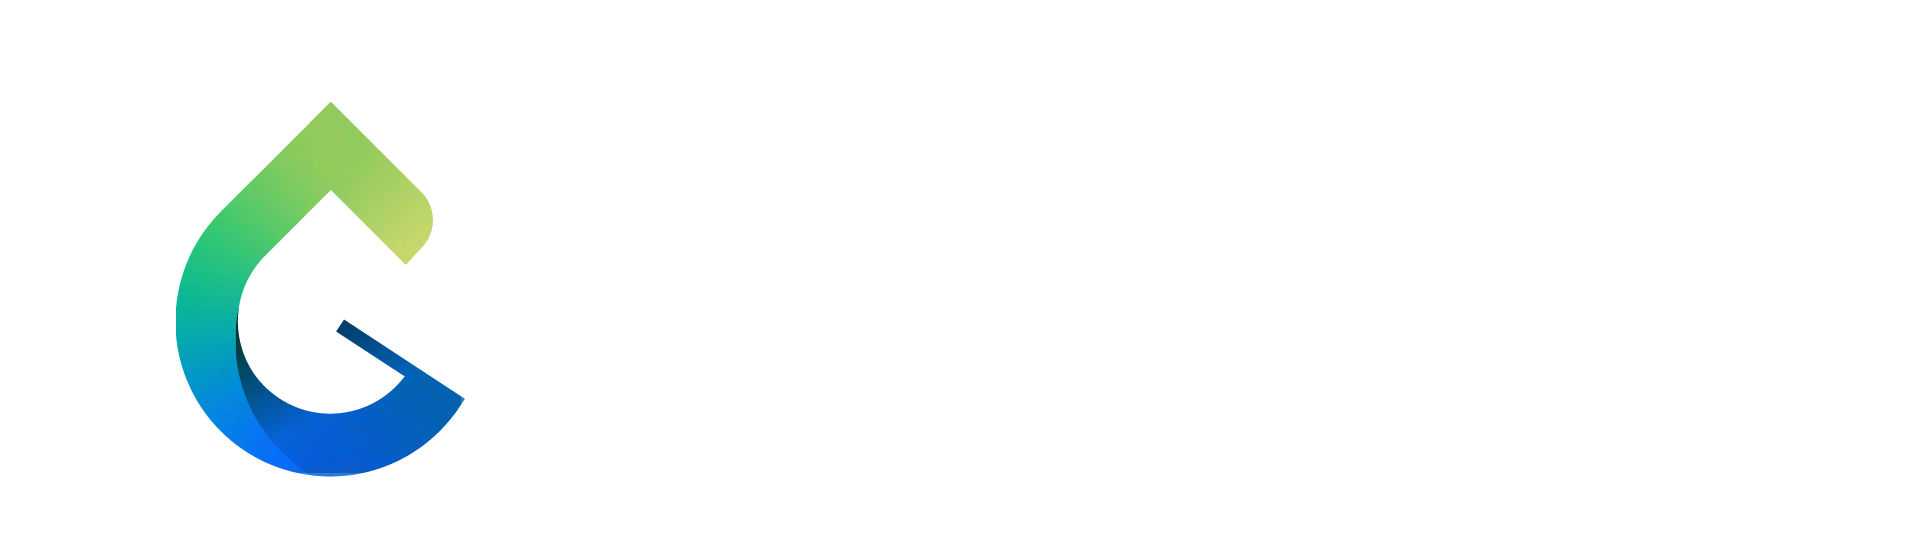 ghilli logo white-06